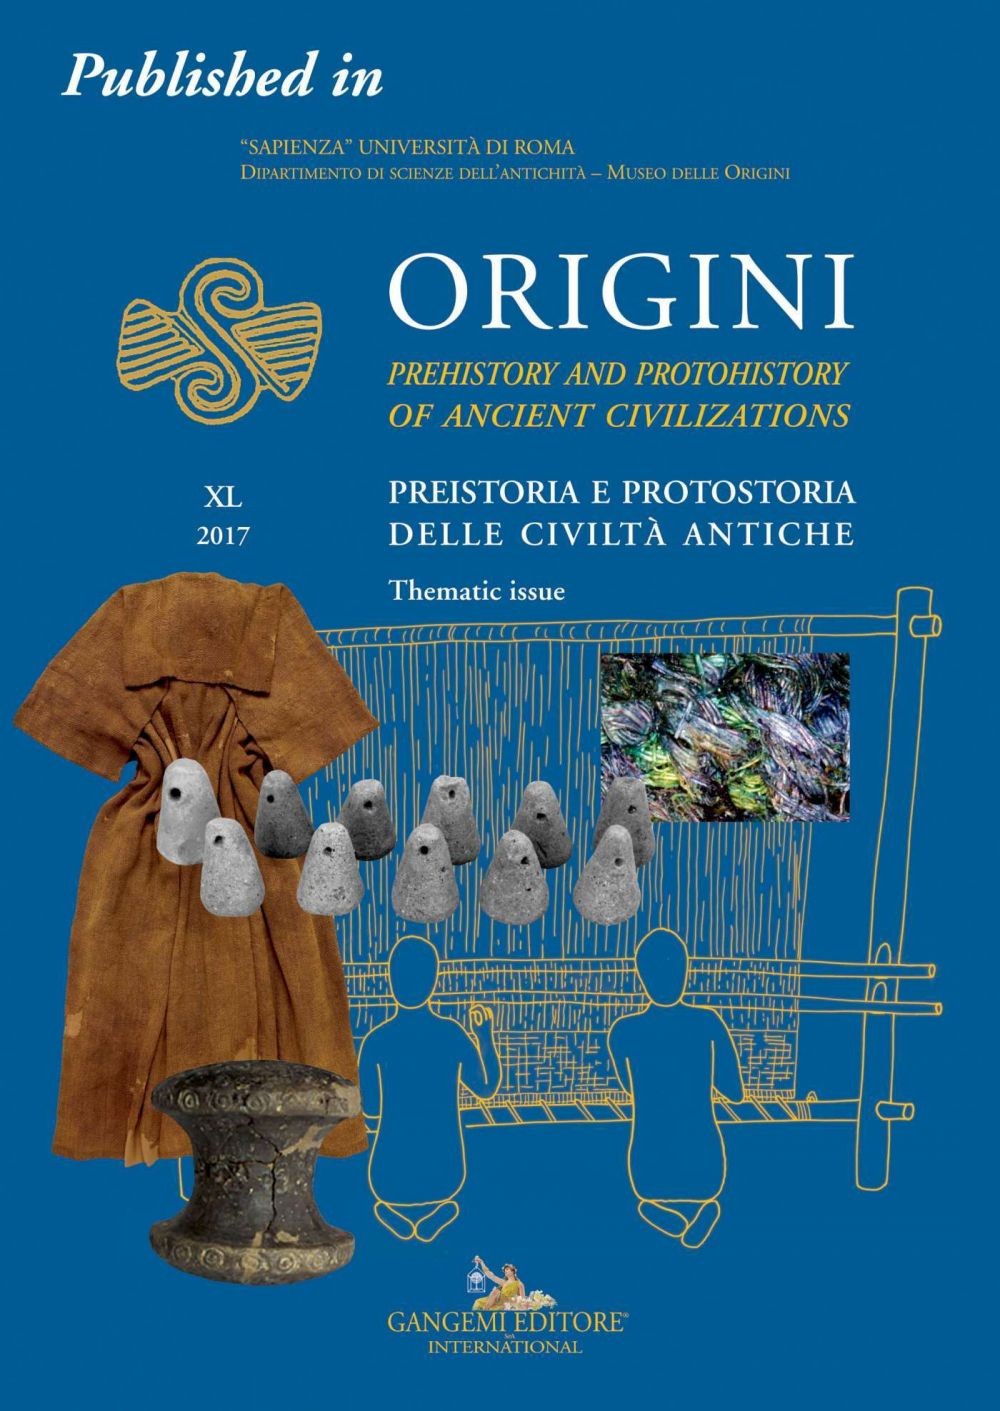 New textile finds from Tomba dell’Aryballos sospeso, Tarquinia: Context, analysis and preliminary interpretation - Librerie.coop